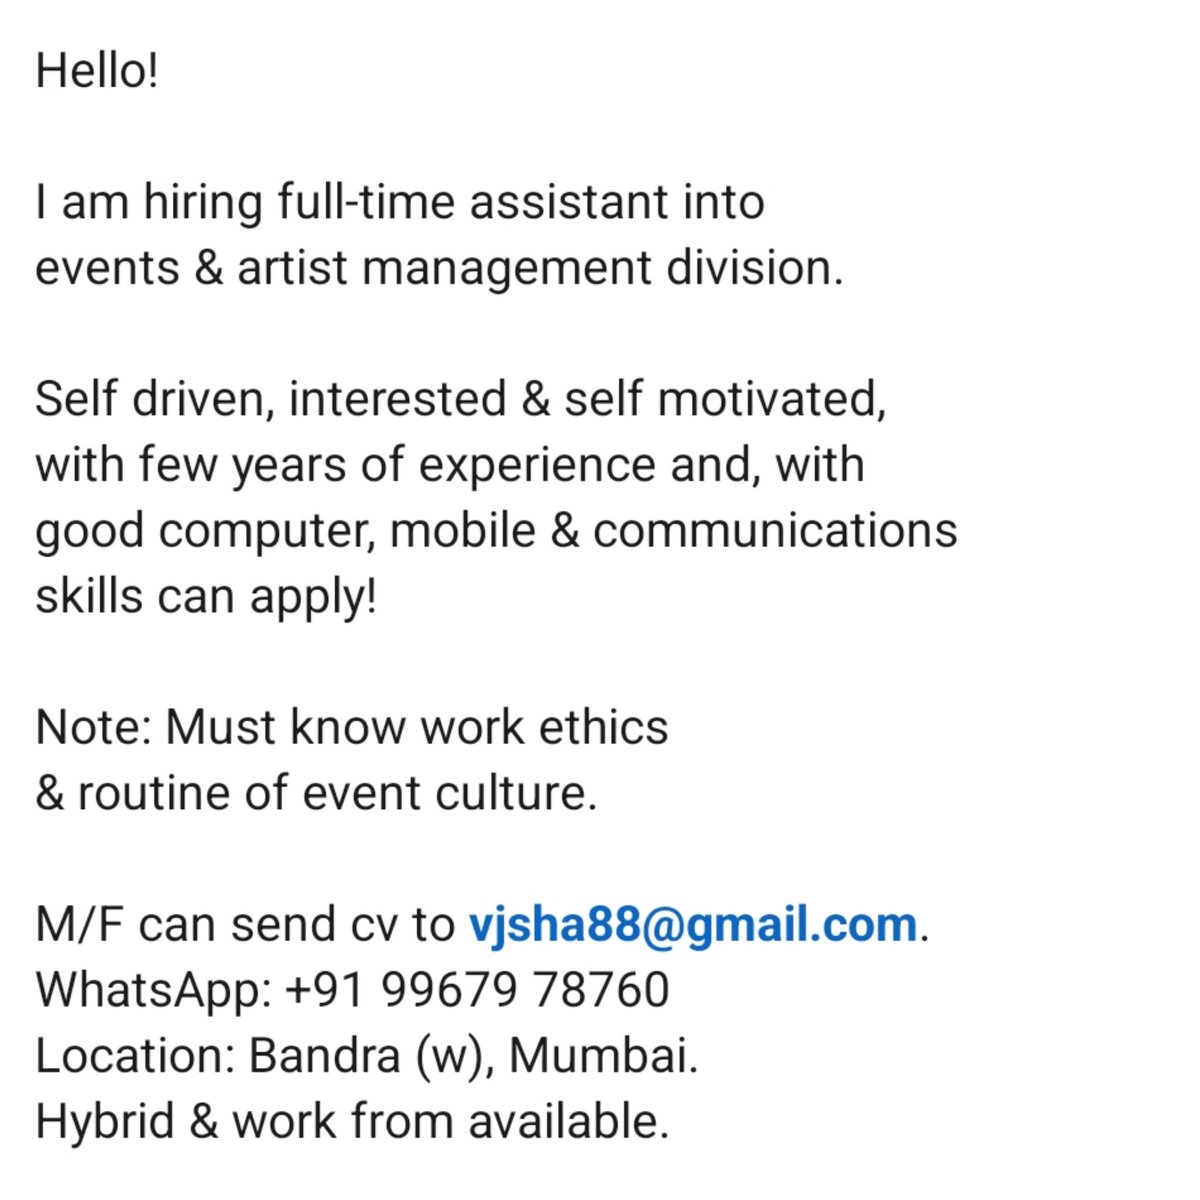 Hello!

I am hiring full-time assistant into
events & artist management division.

Thanks,
Shadab

#hiring #hiringfreshers #jobalert #mumbaijobs #eventmanagement #assistantjobs